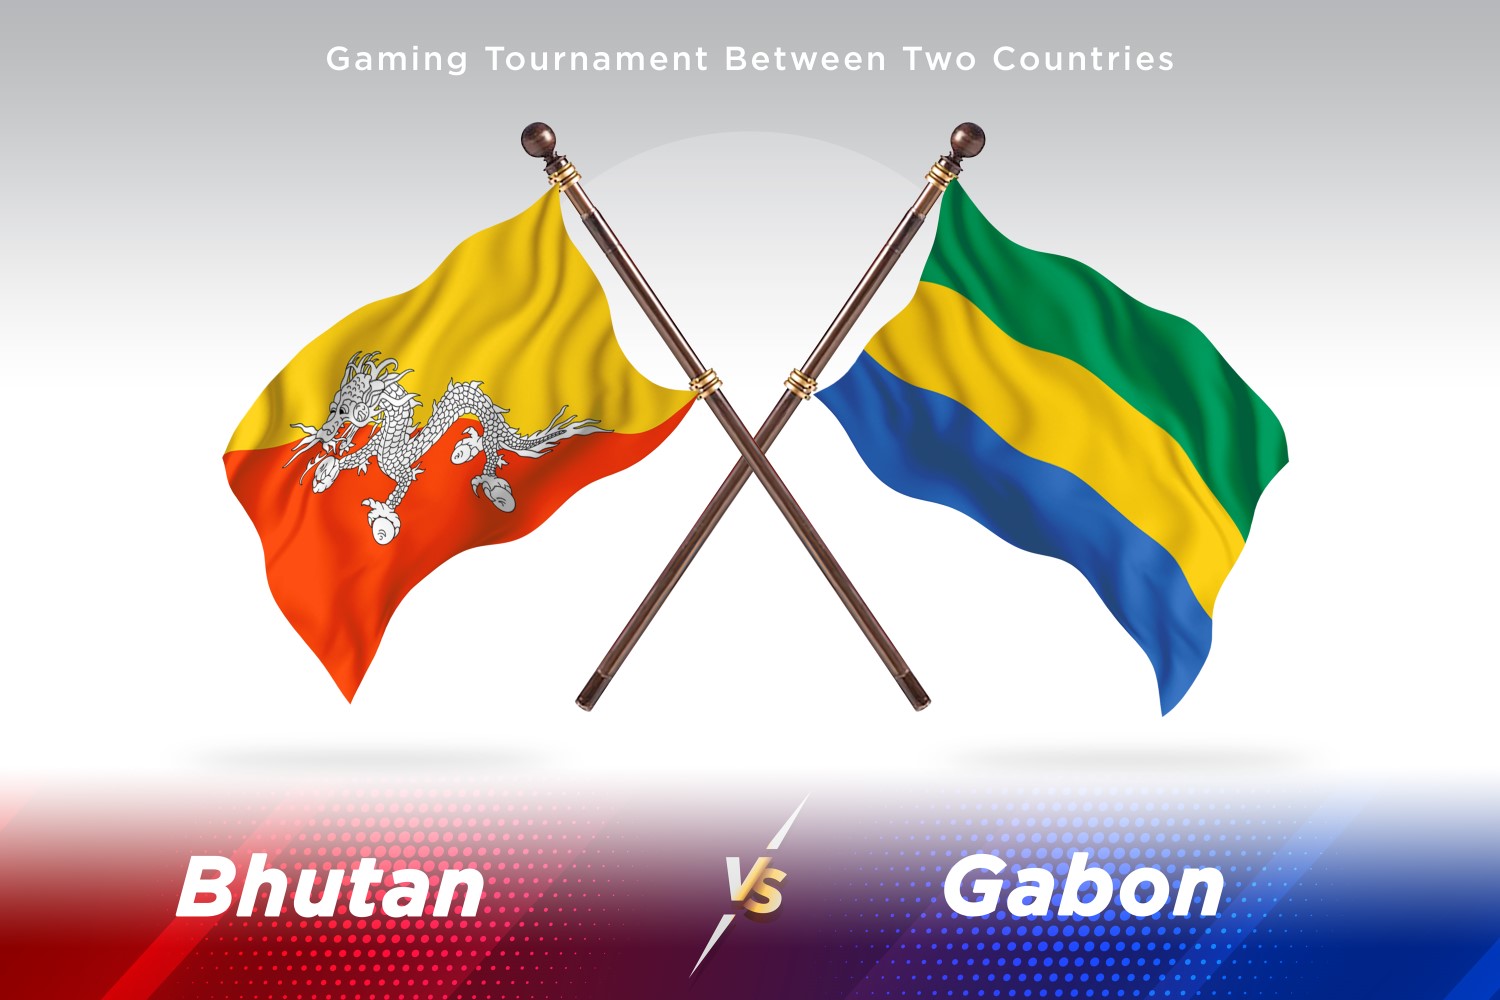 Bhutan versus Gabon Two Flags